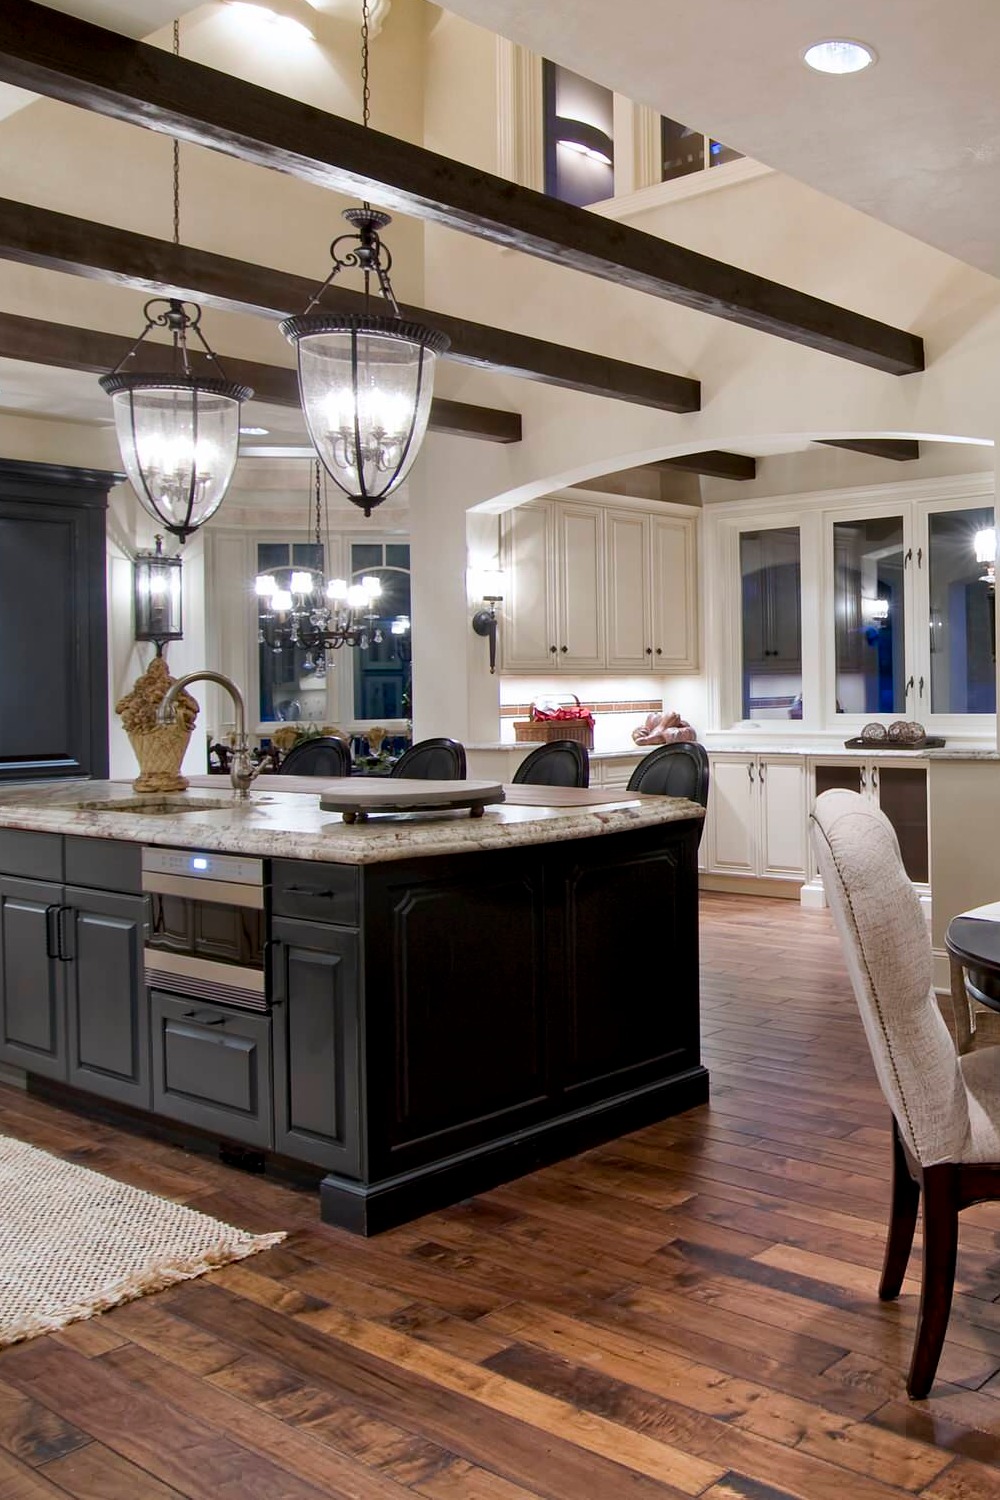 White Granite Countertops Dark Cabinets Limestone Backsplash Wood Floor Pendant Lighting Open Concept Kitchen Design